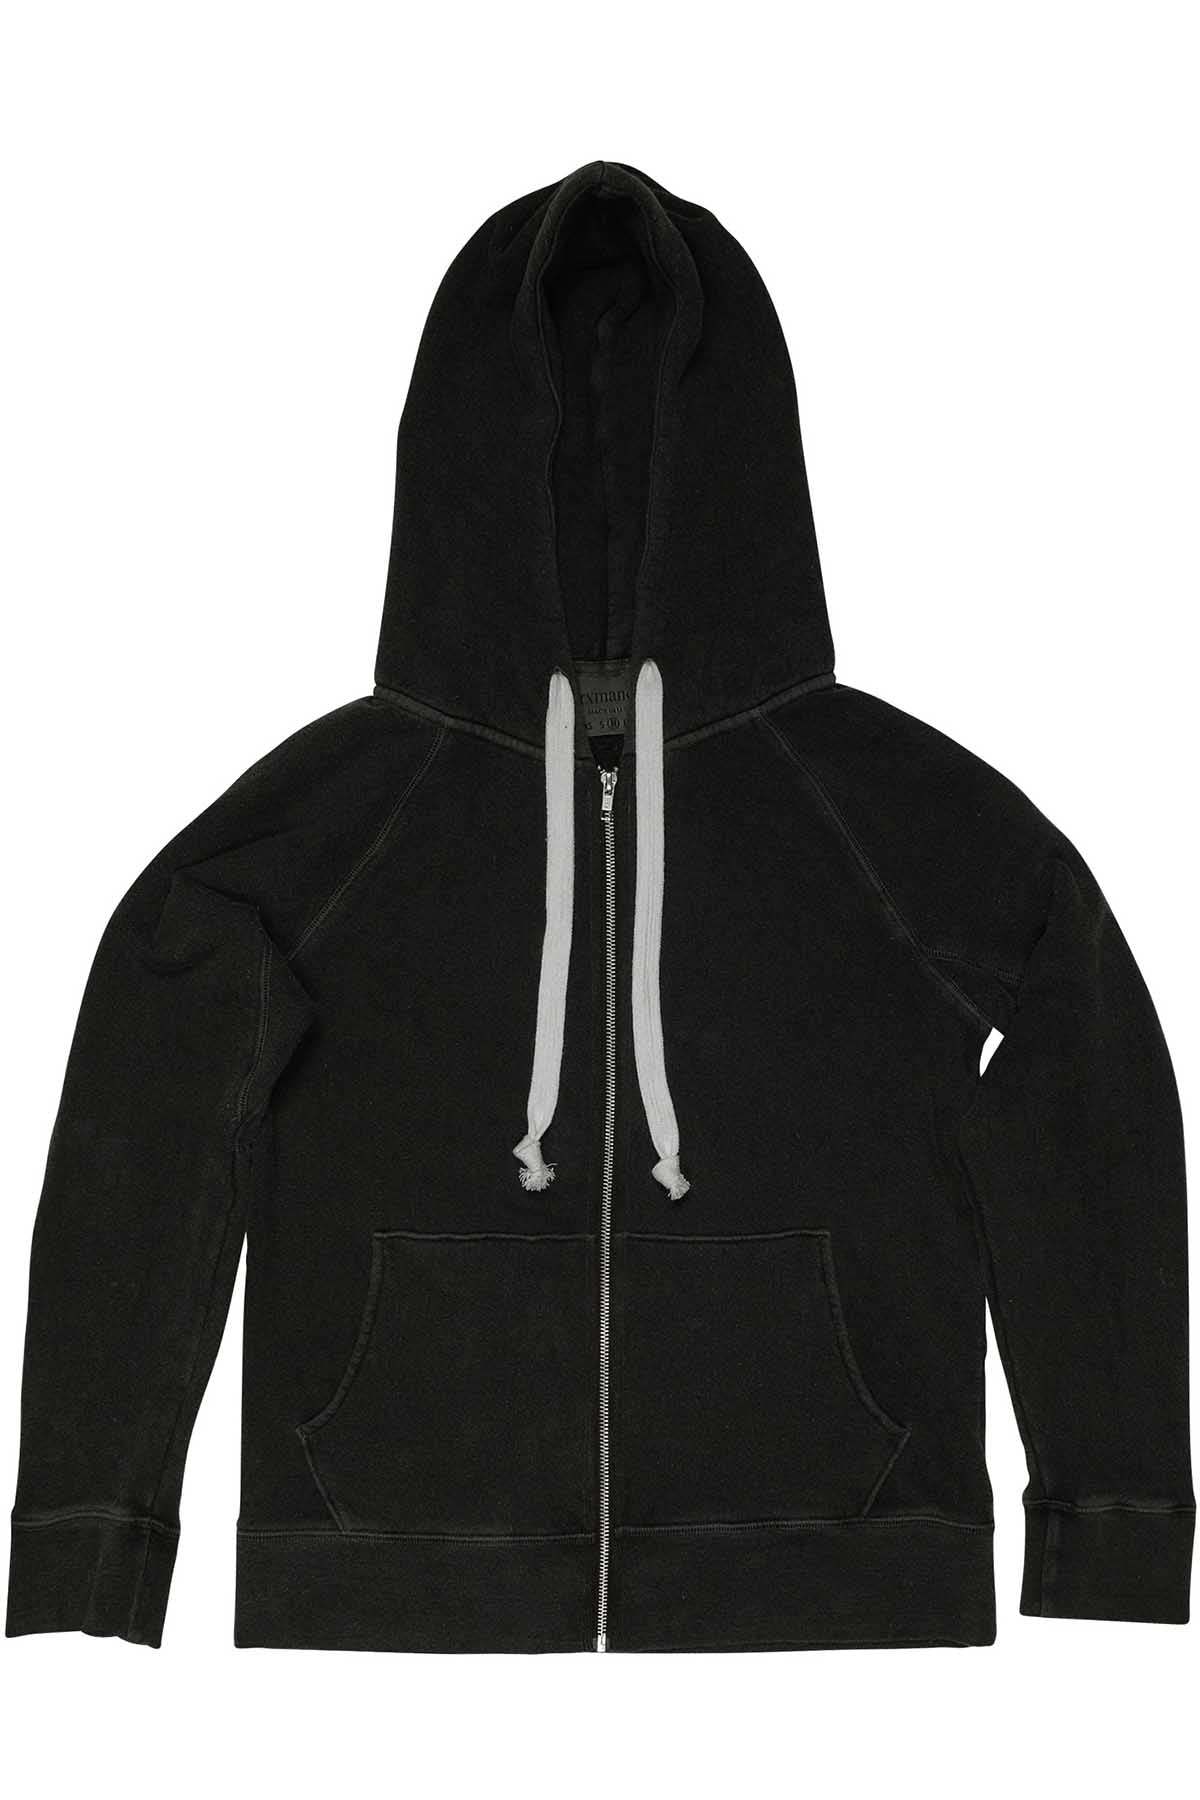 Rxmance Phantom Black Hooded Zip Sweatshirt